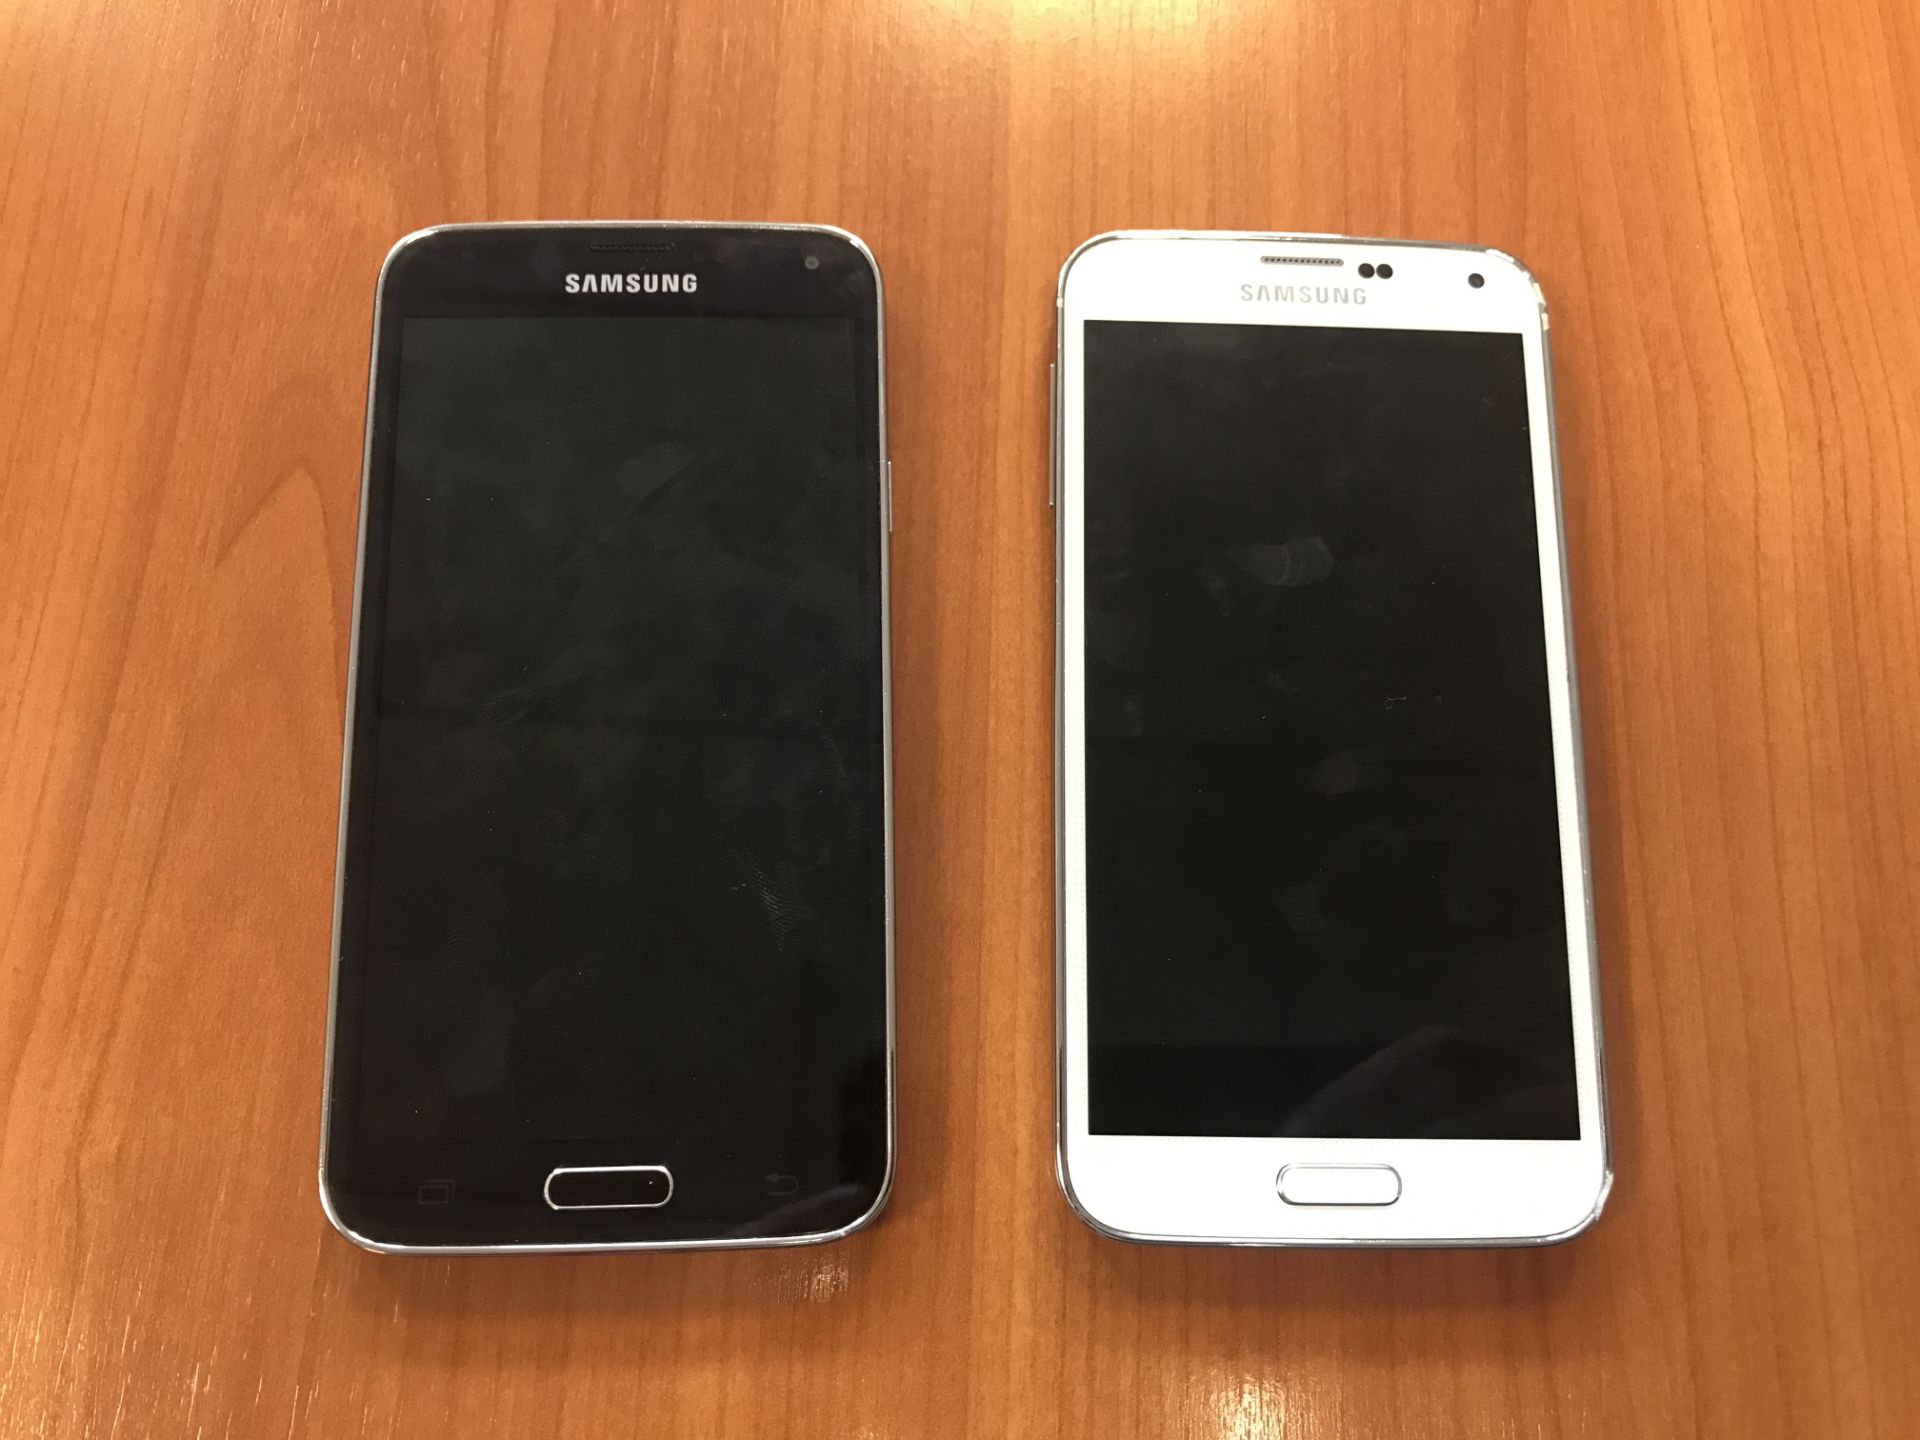 2 x Samsung SM-G900F Mobile Phones, One Phone Dama